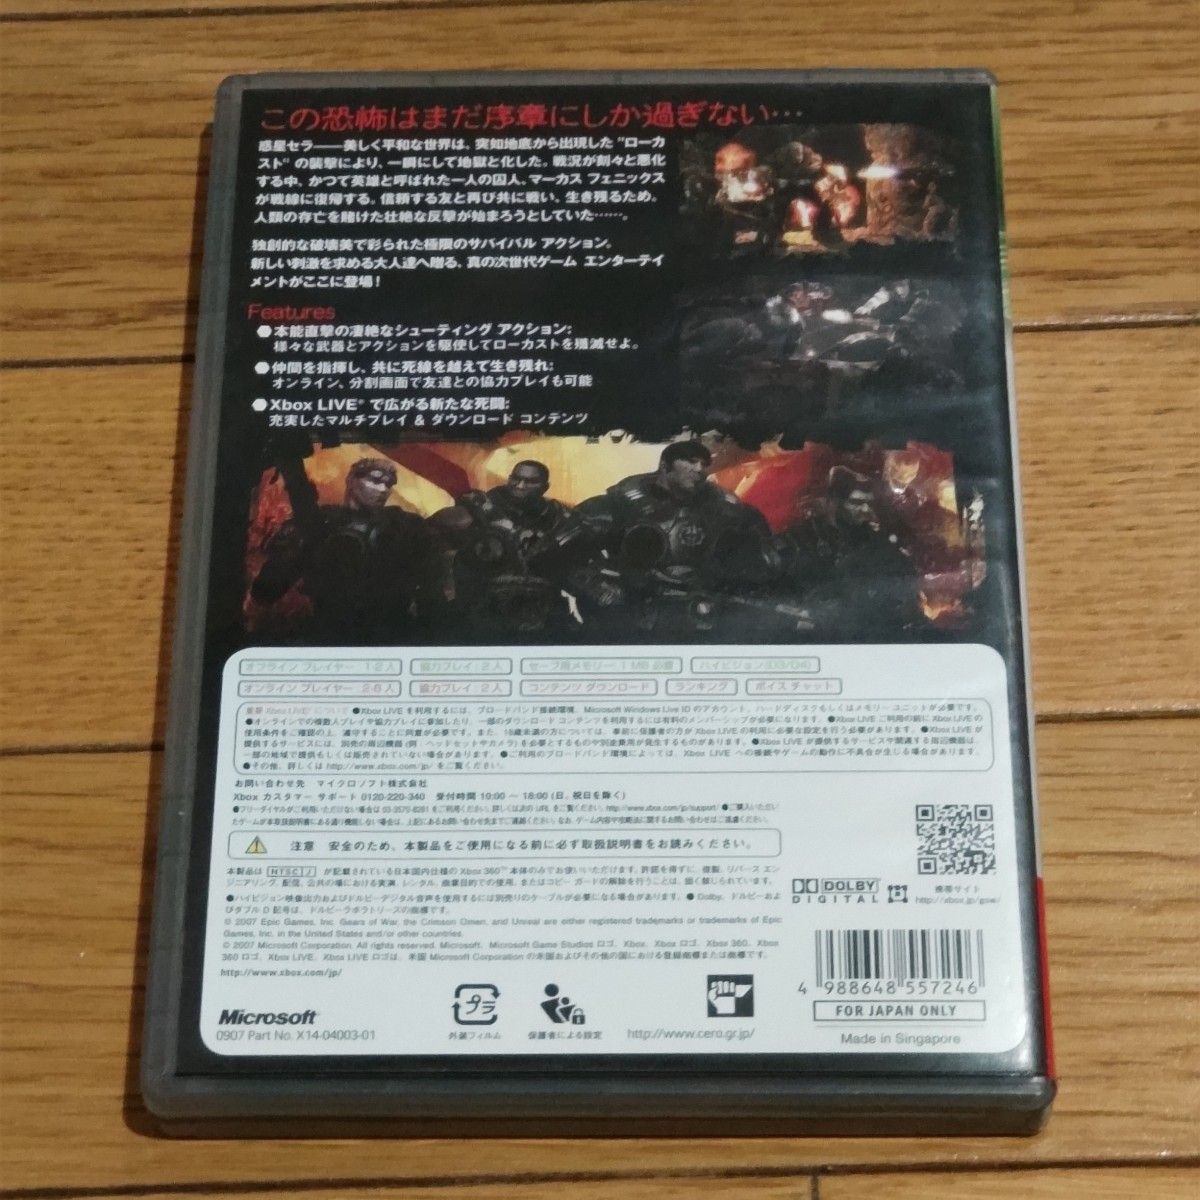 【xbox360】 Gears of War [Xbox 360 プラチナコレクション］